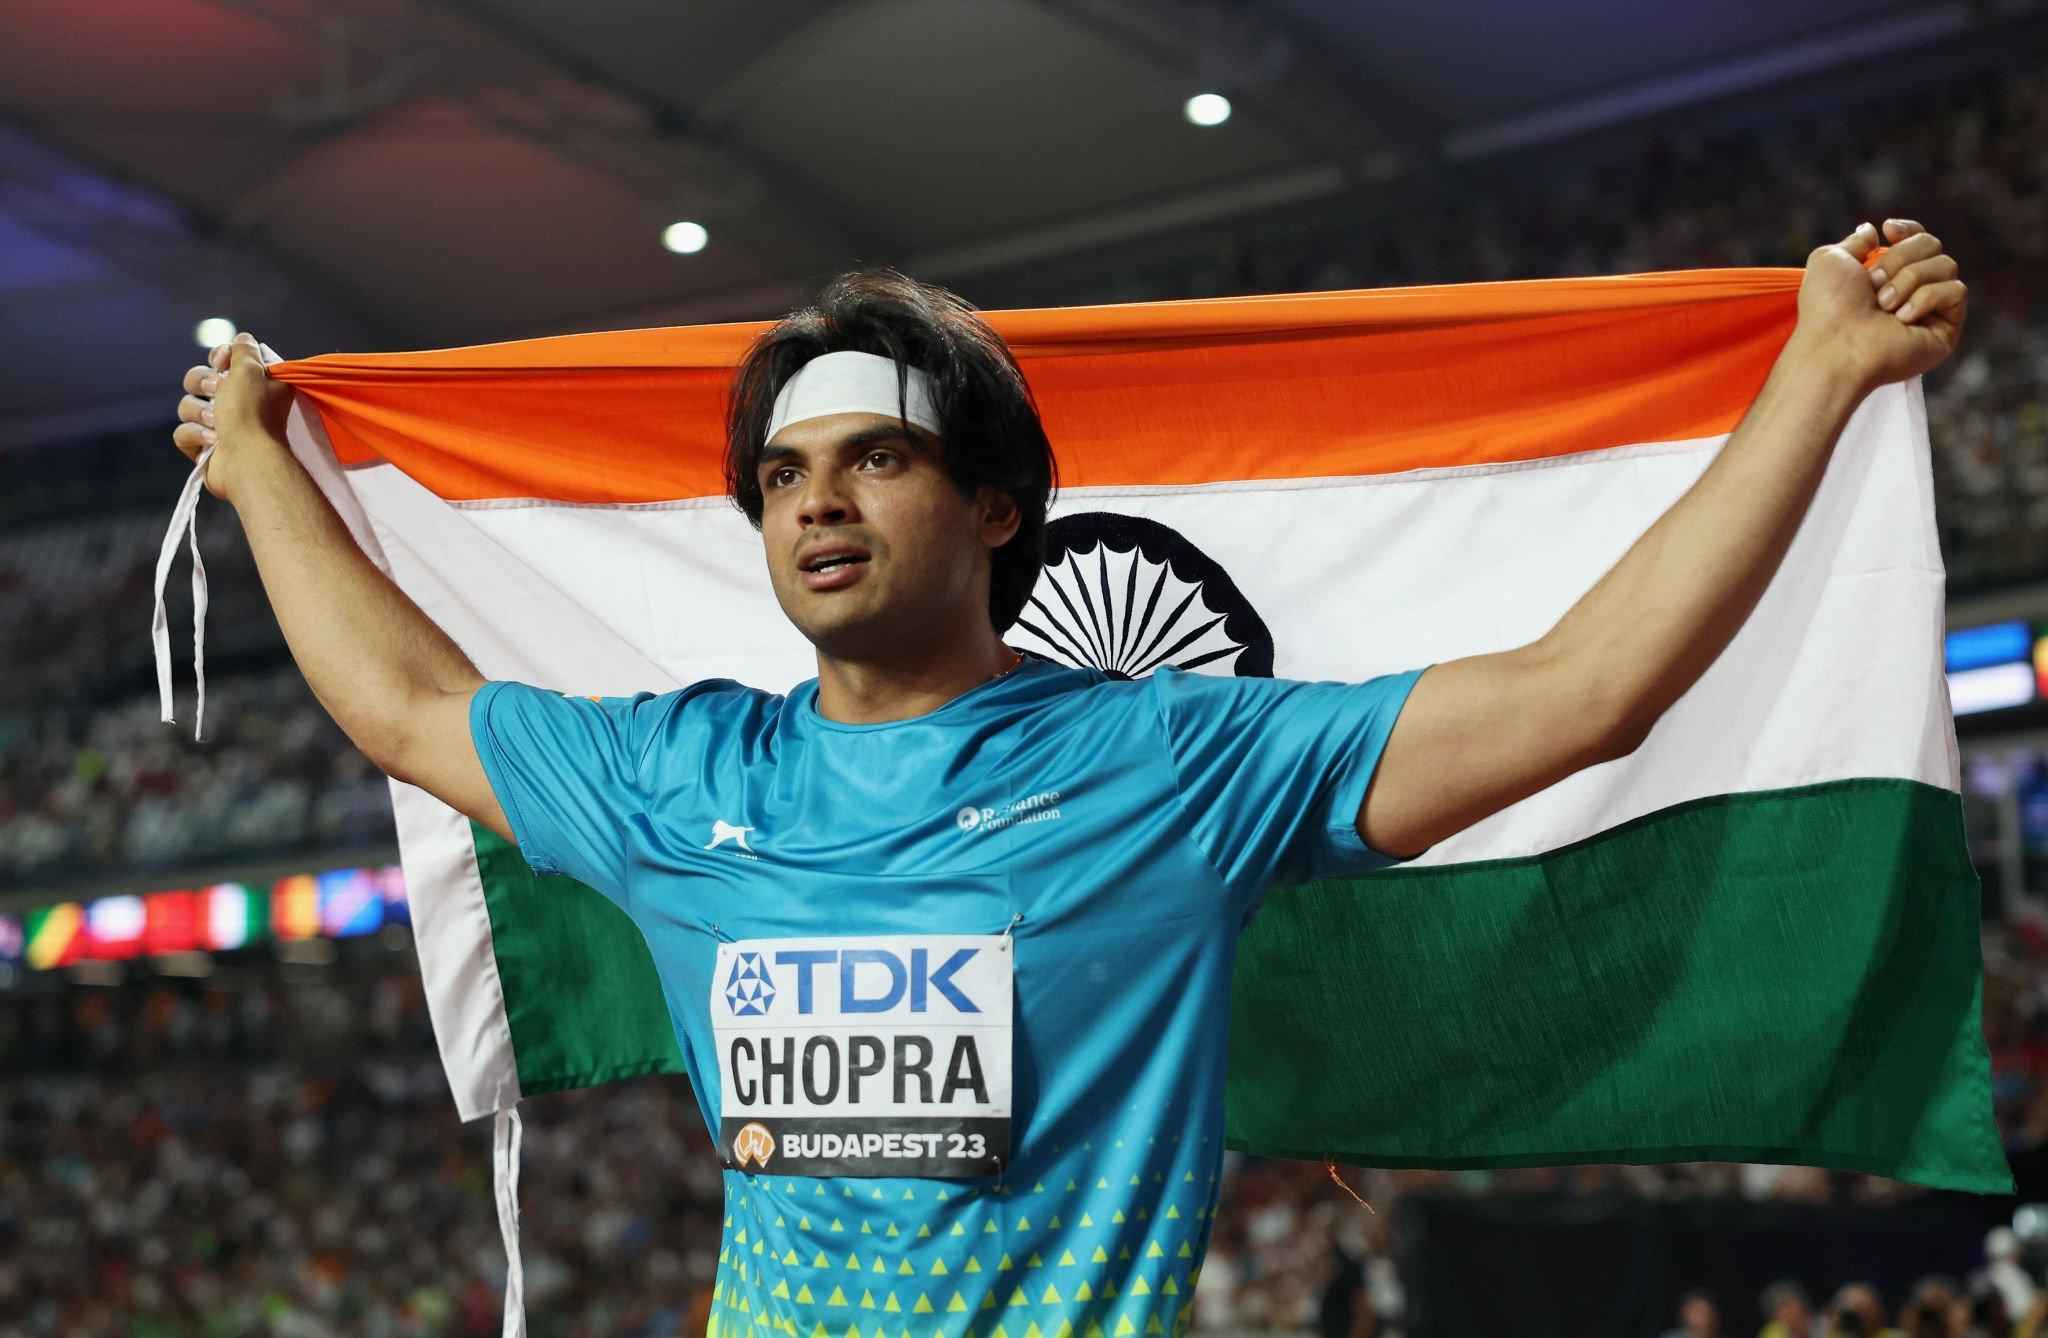 “I'm the Olympic champion now I'm the world champion”: Neeraj Chopra as he won the Gold Medal at World Athletics Championship